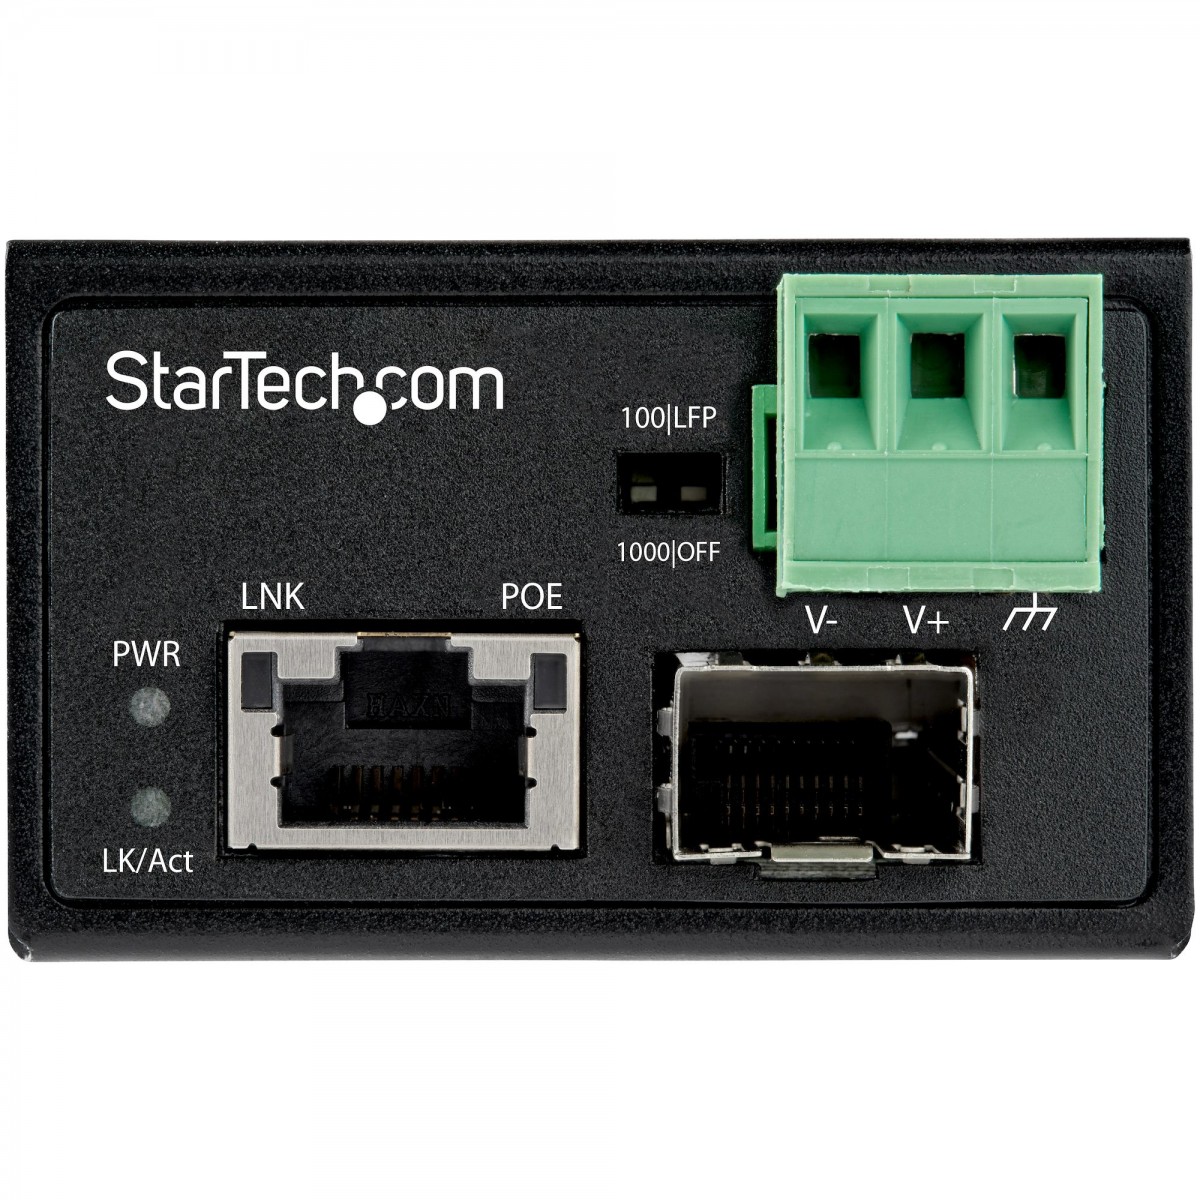 StarTech.com PoE+ Industrial Fiber to Ethernet Media Converter 30W - SFP to RJ45 - Singlemode/Multimode Fiber to Copper Gigabit 